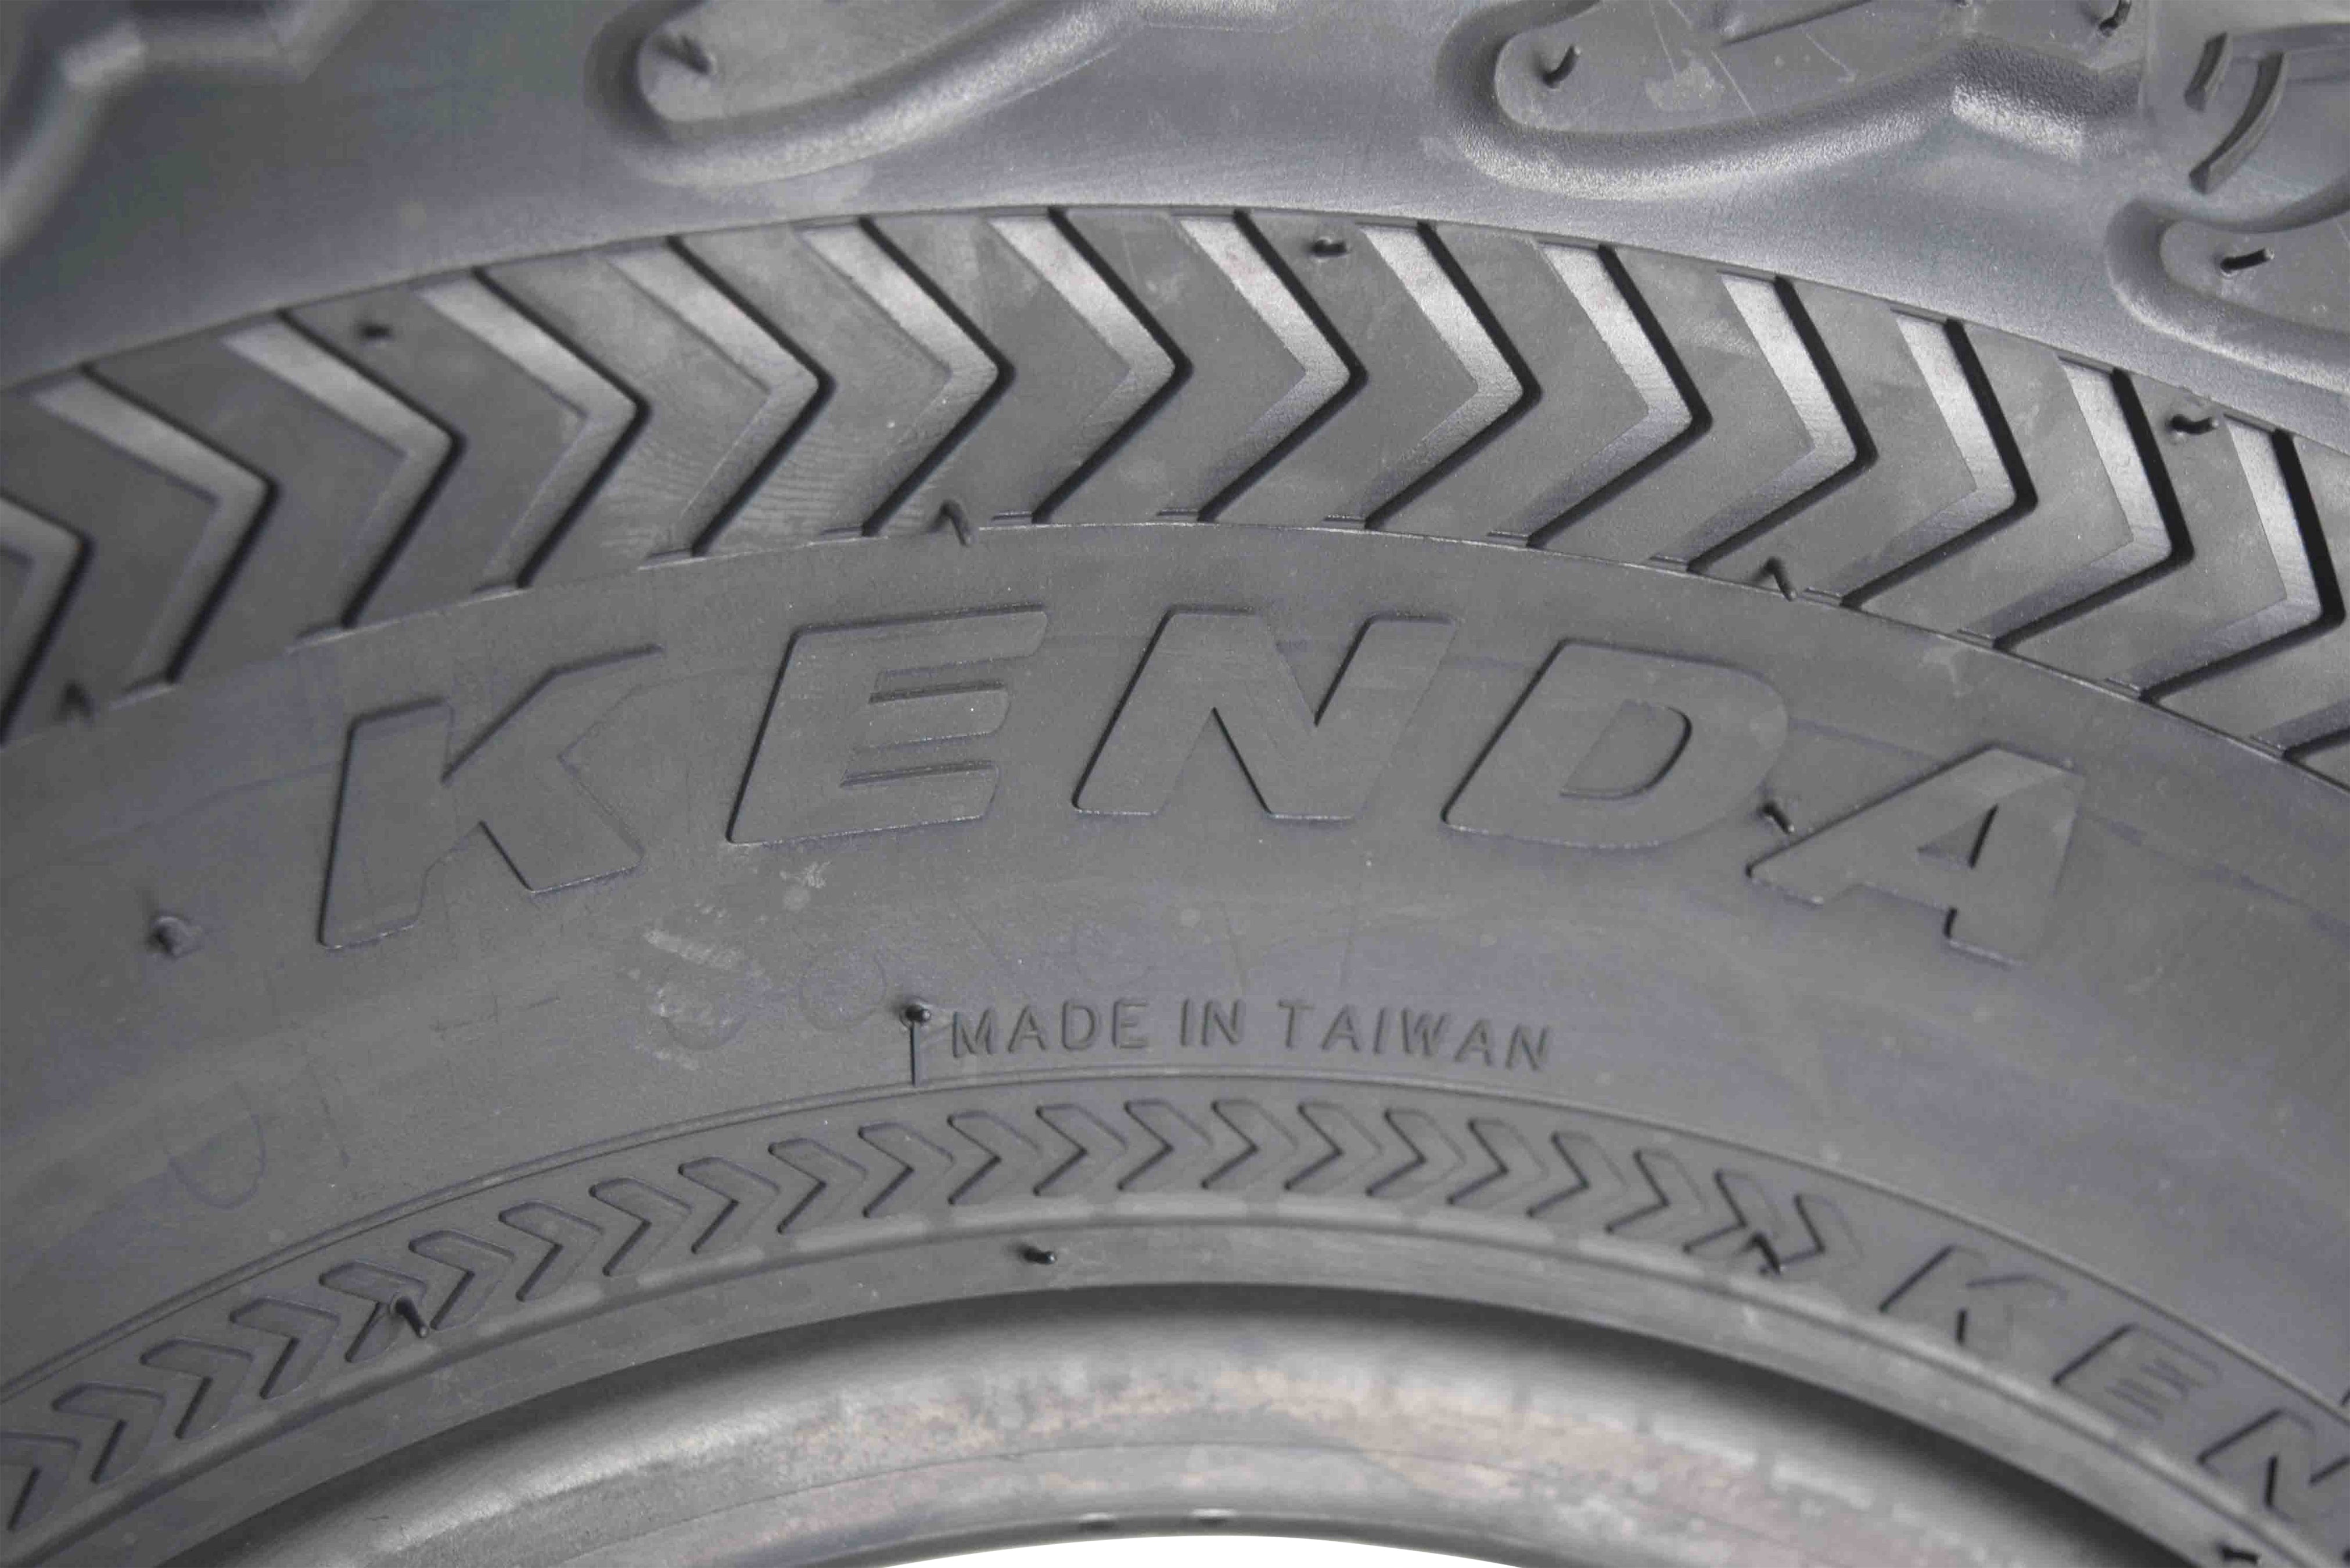 Kenda Bear Claw EX 22x7-10 Front 6 PLY ATV Tire Bearclaw 22x7x10 Single Tire